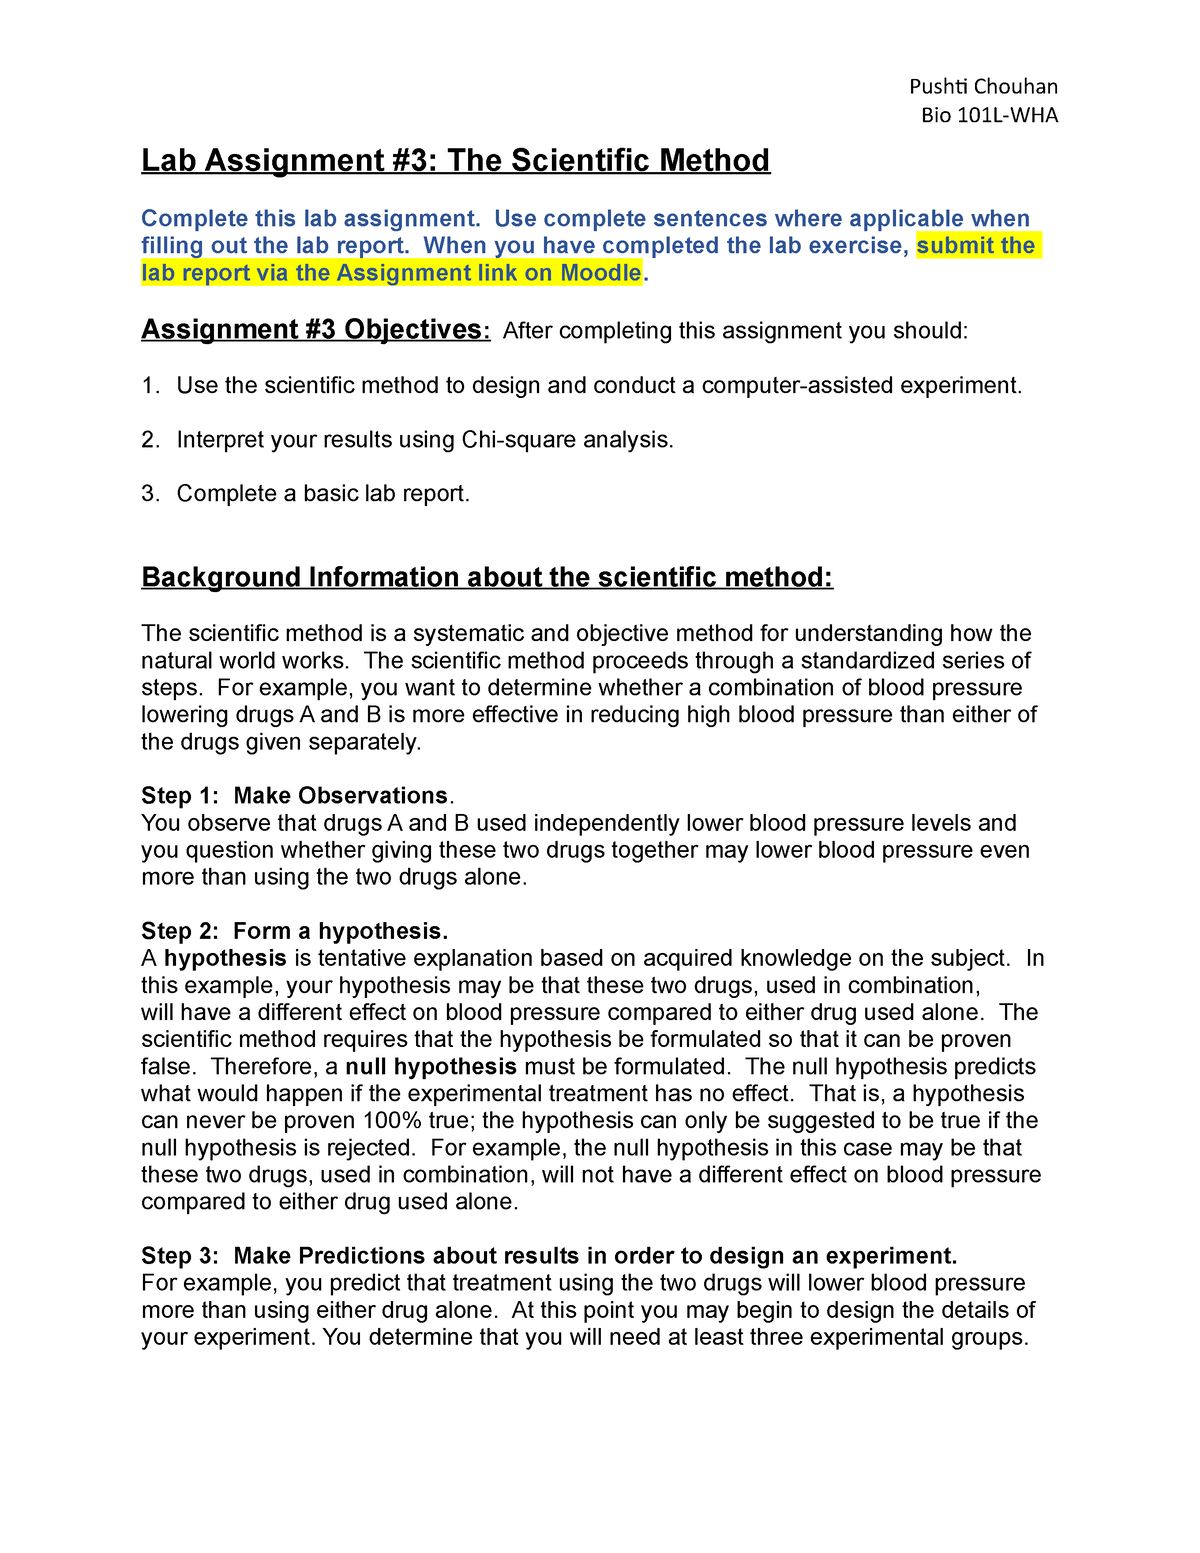 scientific method project essay